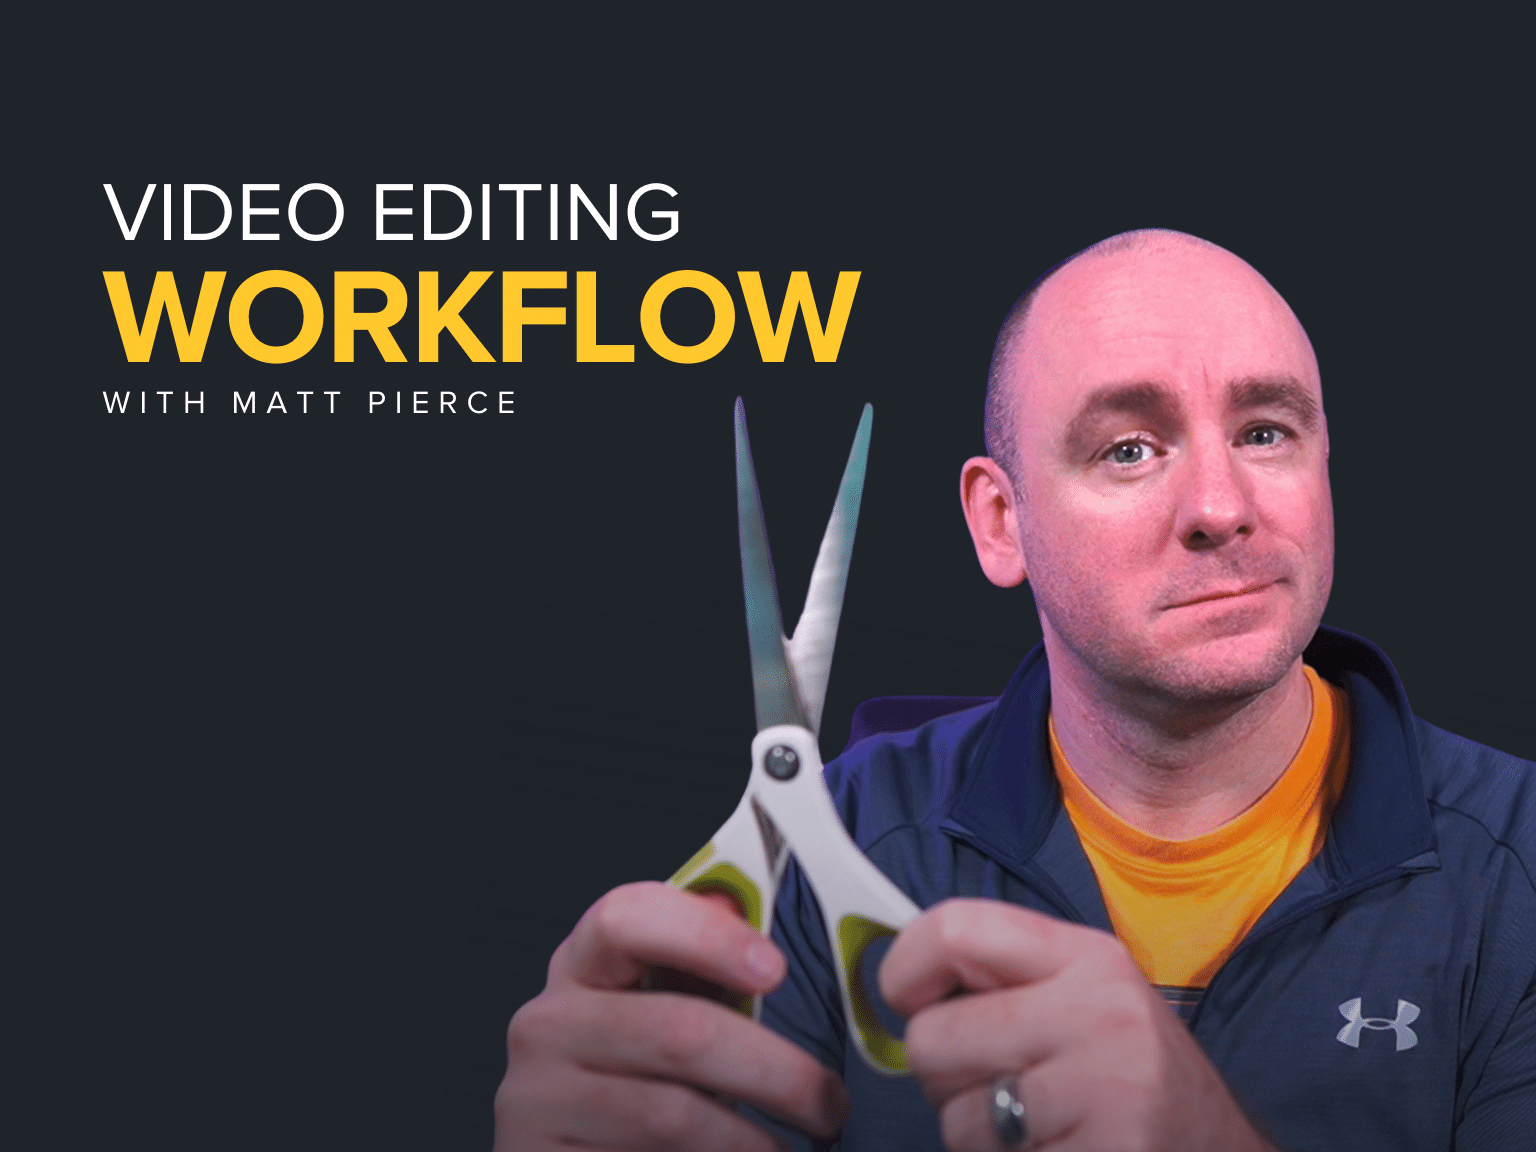 Video Editing Workflow